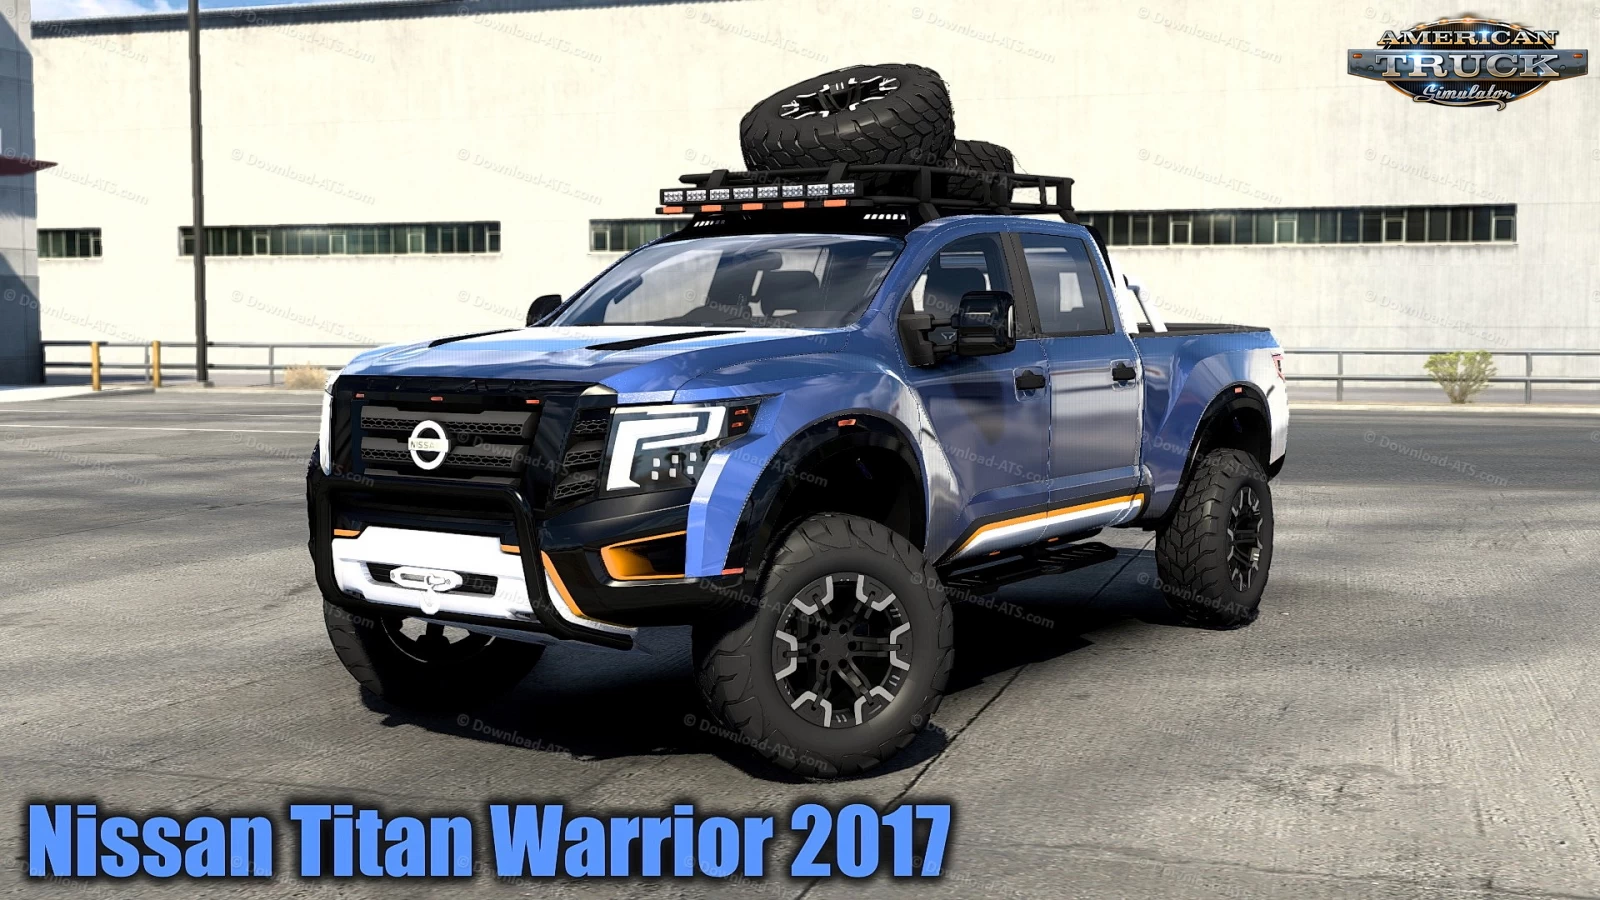 Nissan Titan Warrior 2017 + Interior v1.3 (1.45.x) for ATS